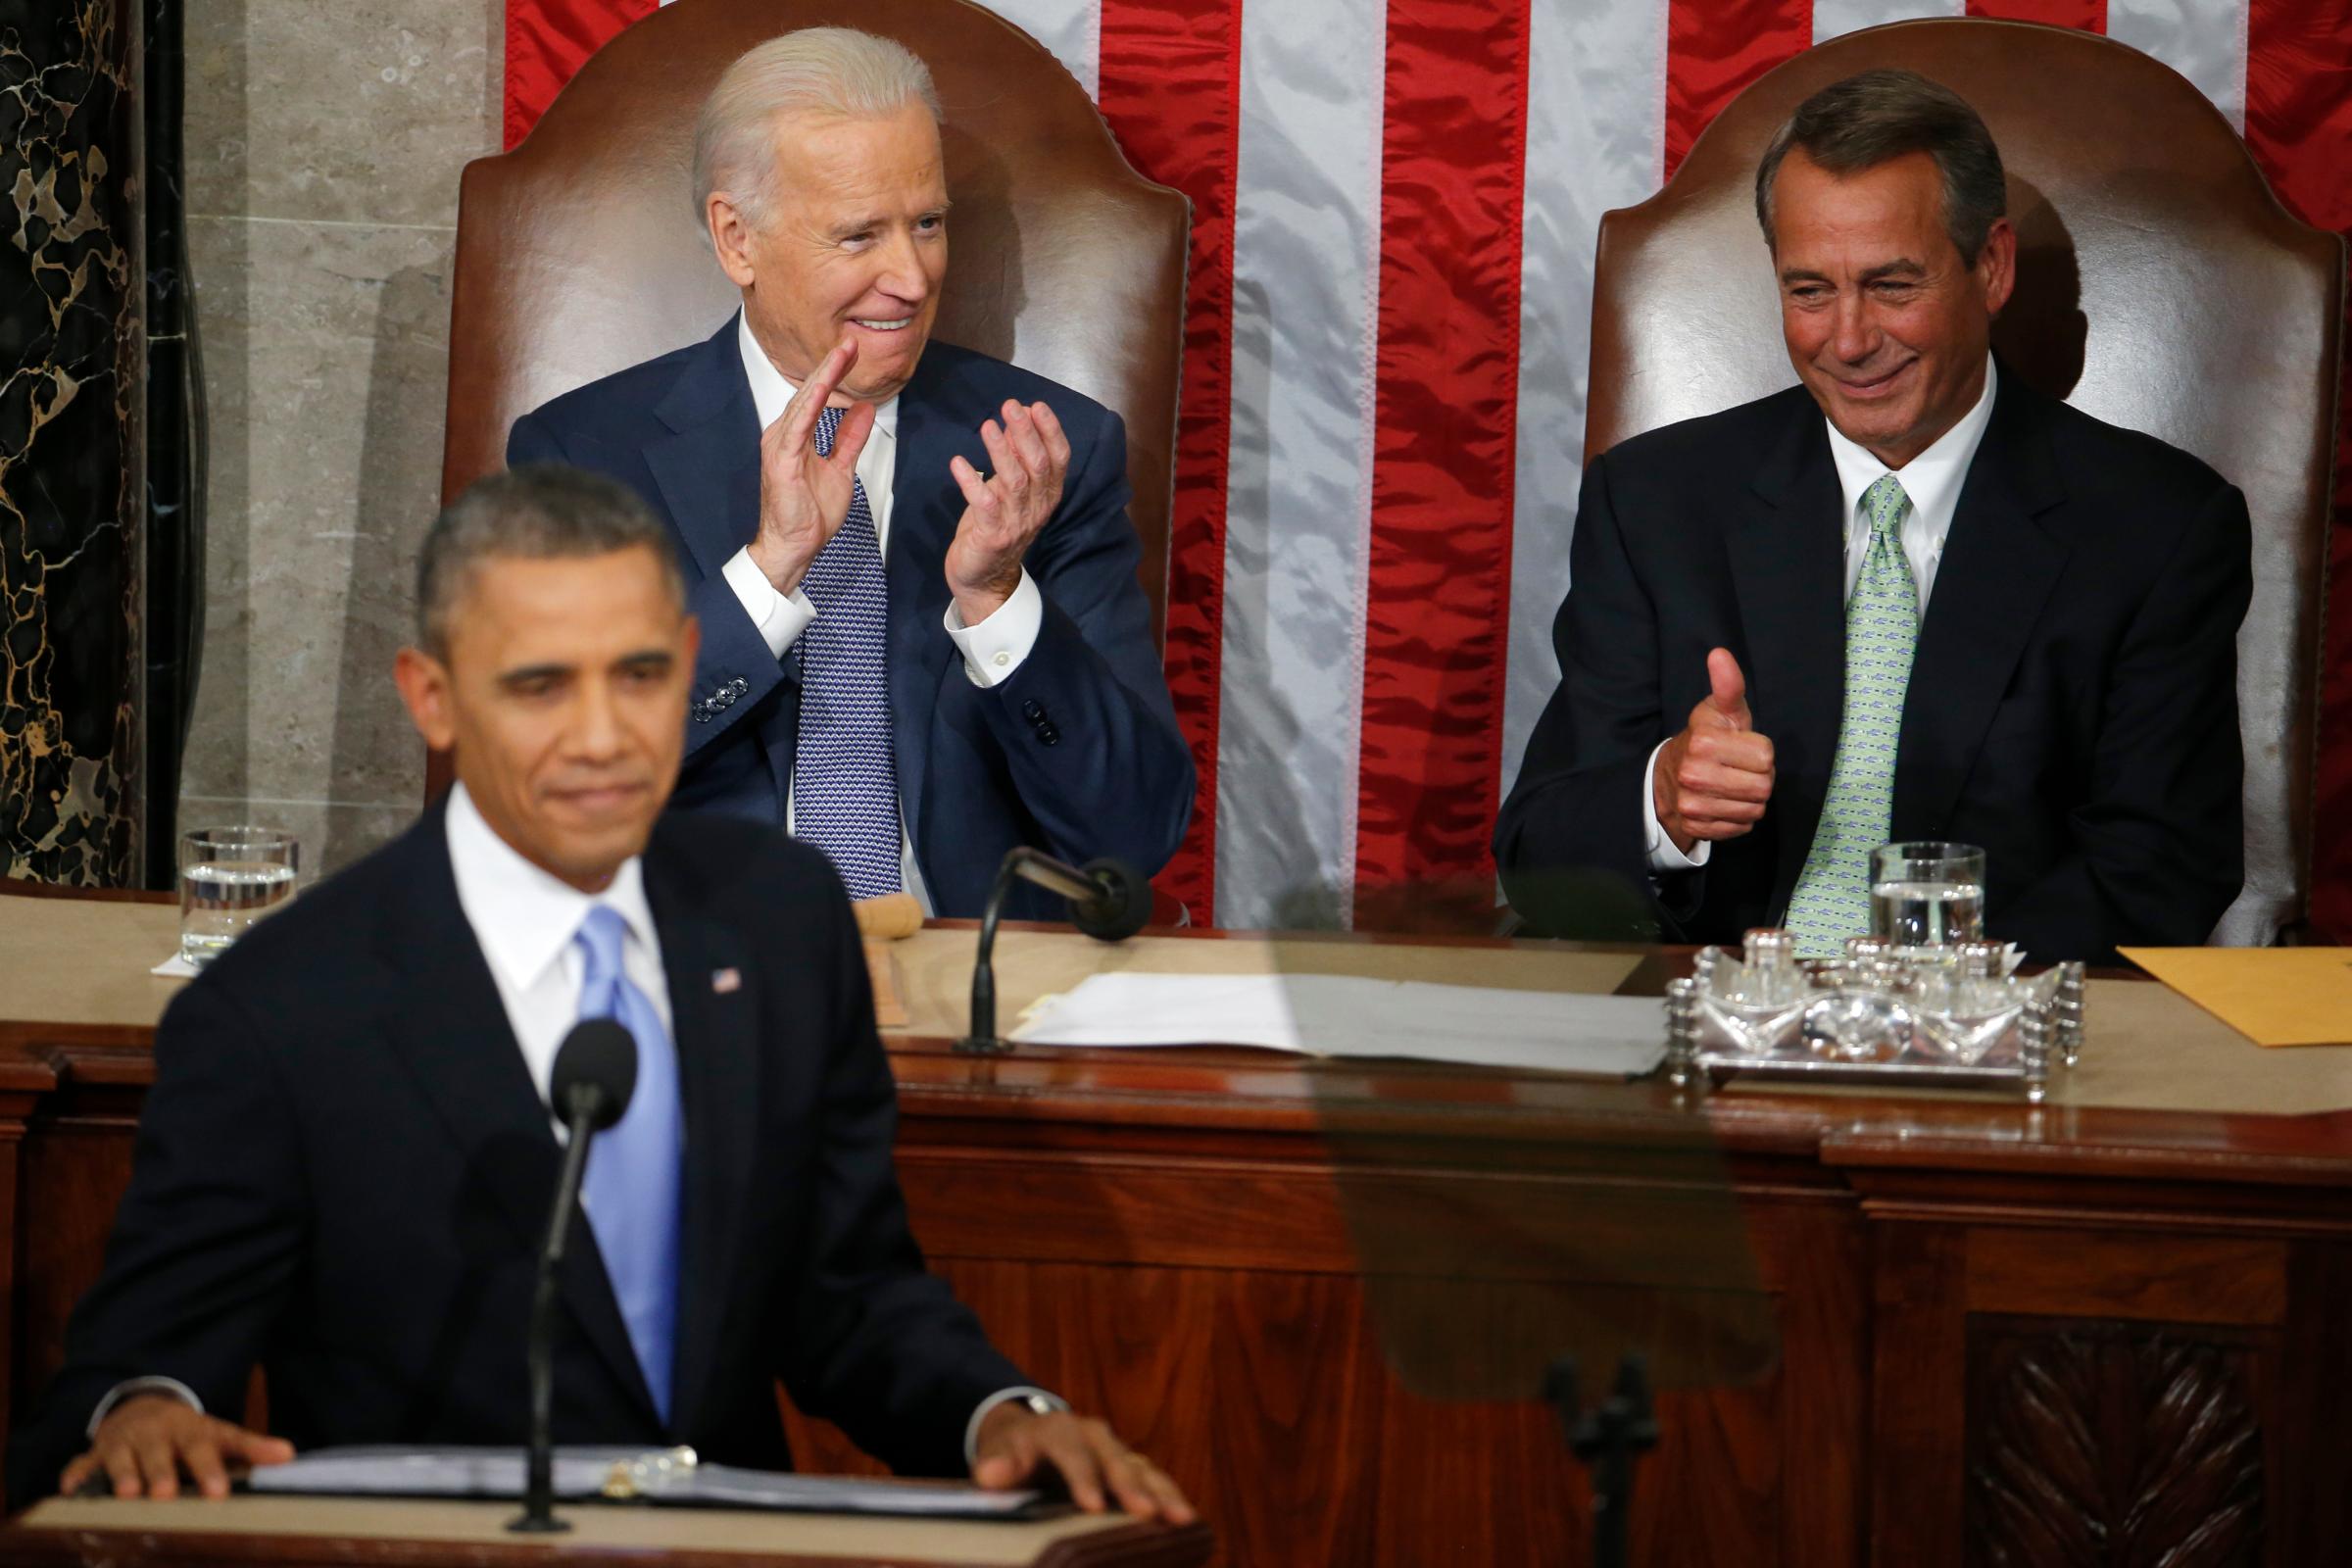 House Speaker John Boehner gestures toward President Barack Obama as Vice President Joe Biden applauds during the president's State of the Union address on Capitol Hill in Washington on Jan. 28, 2014.